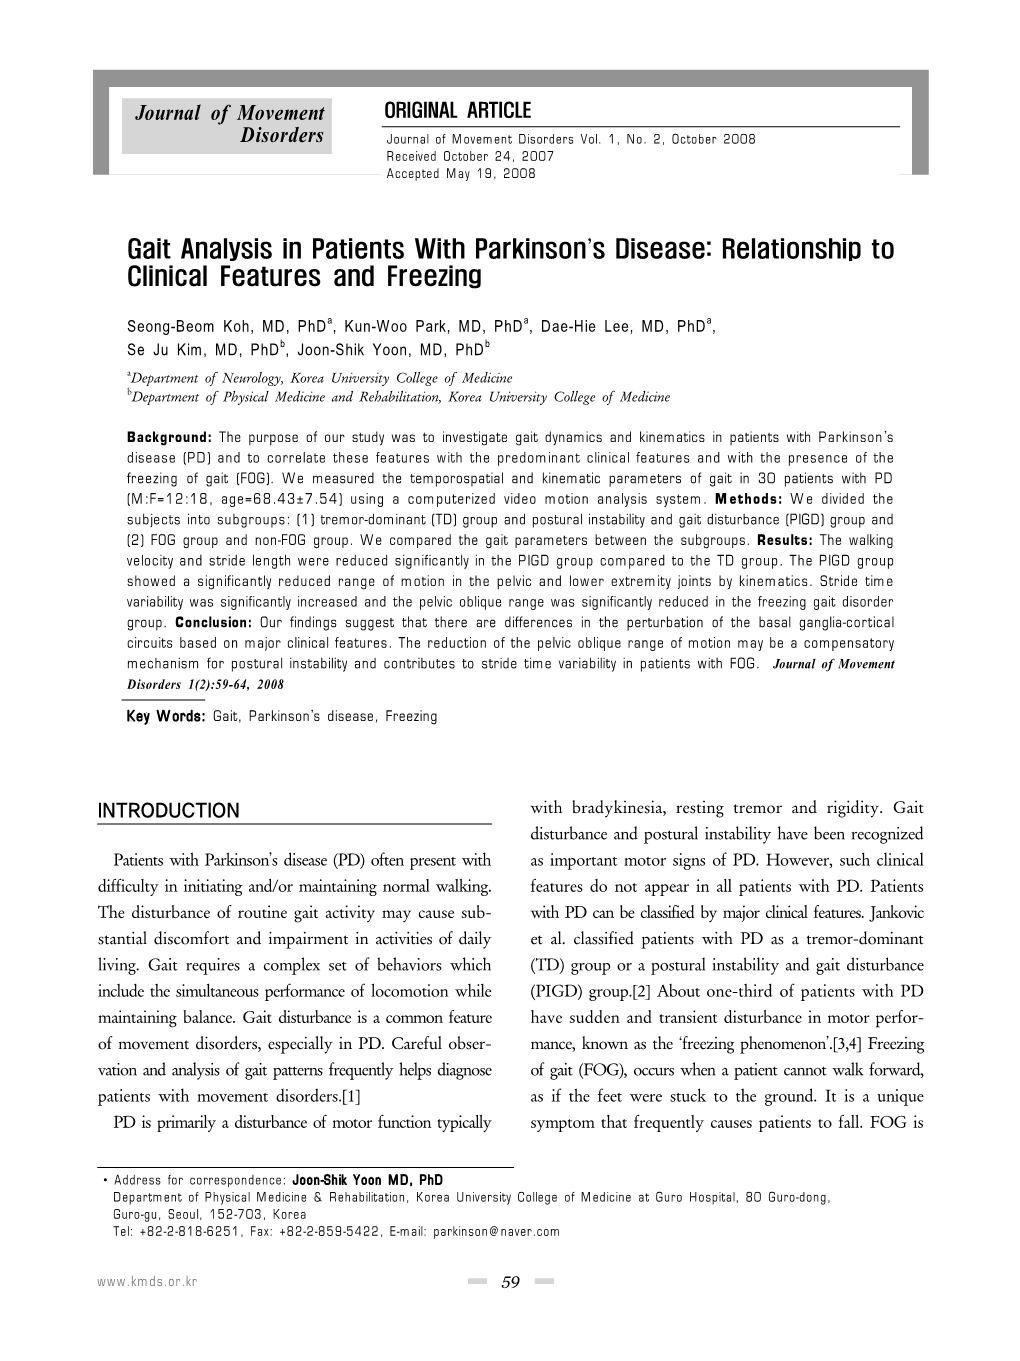 Gait Analysis in Patients with Parkinson's Disease